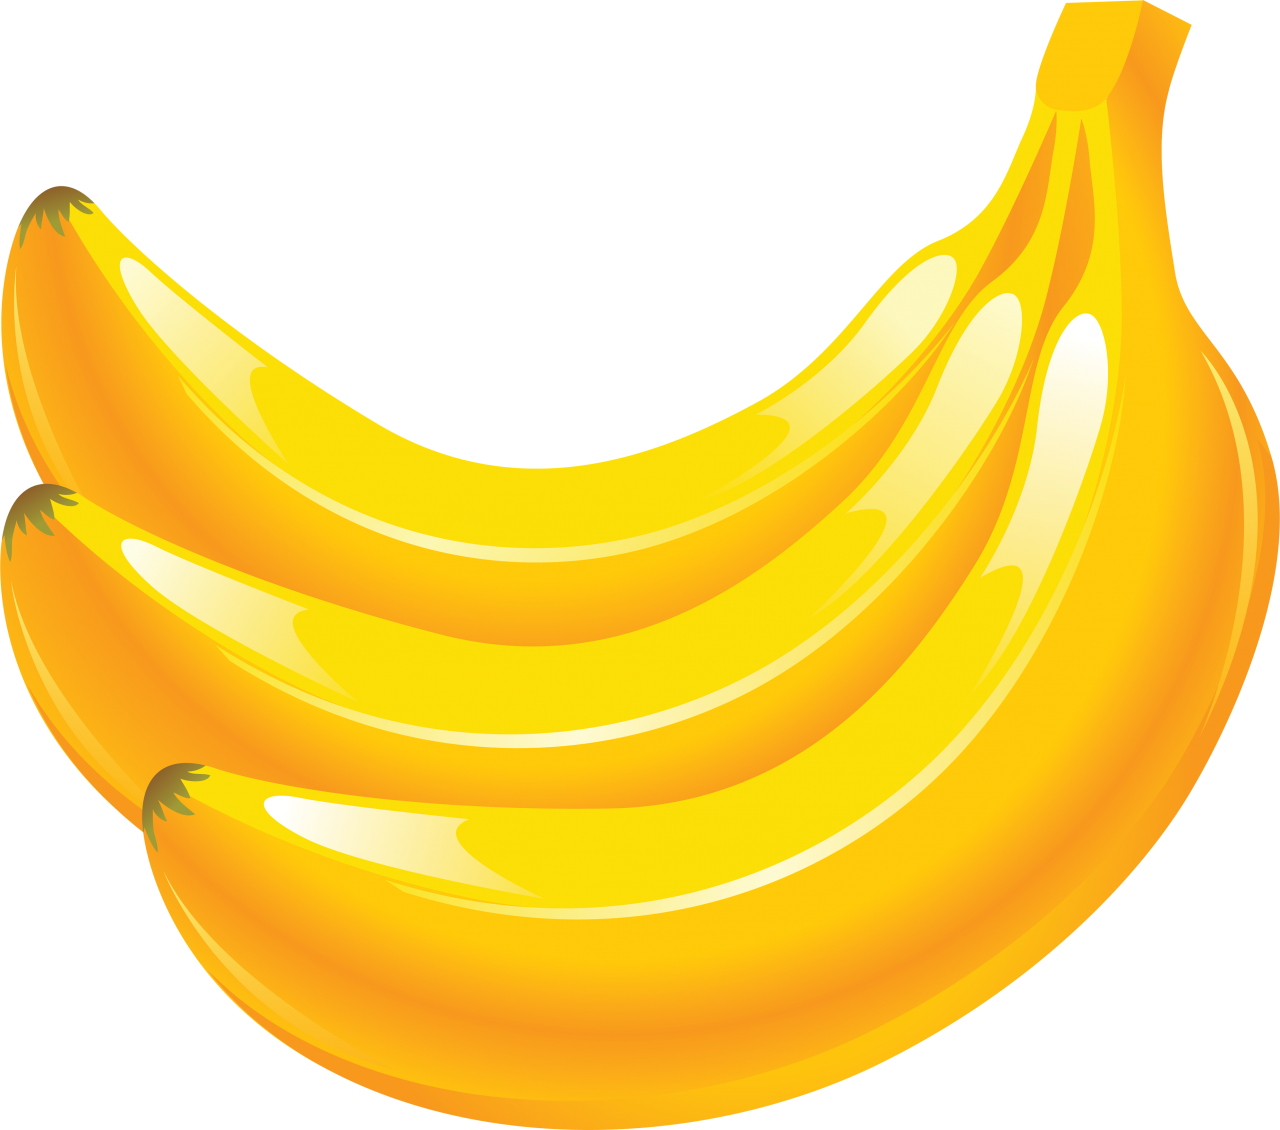 Banana Drawing PNG Image - PurePNG | Free transparent CC0 PNG Image Library